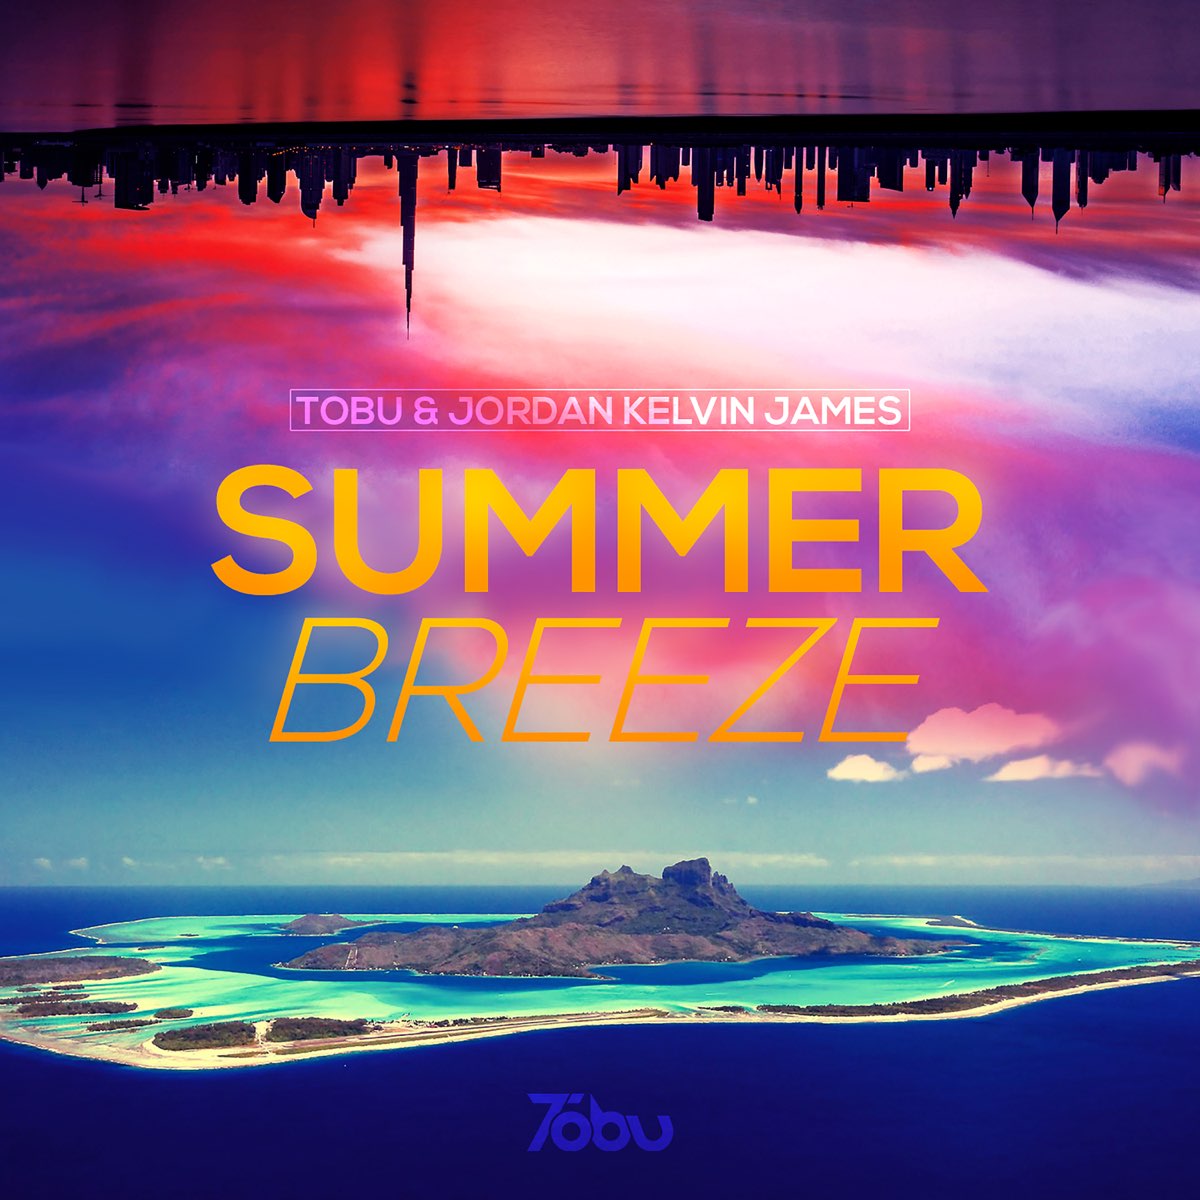 Summer Breeze - Single - Album by Tobu & Jordan Kelvin James - Apple Music